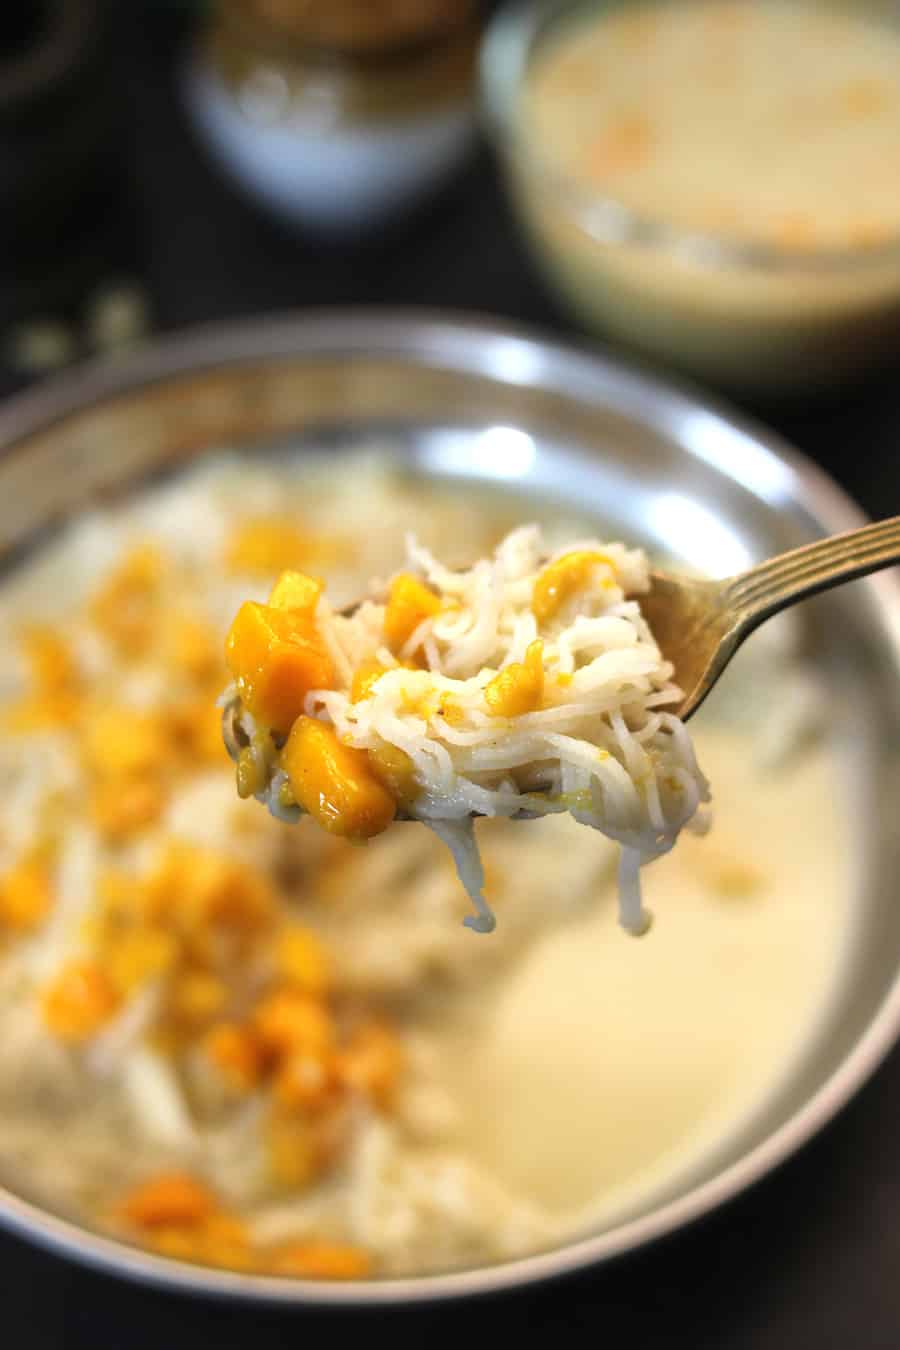 A spoon of rice shavige and mango rasayana.